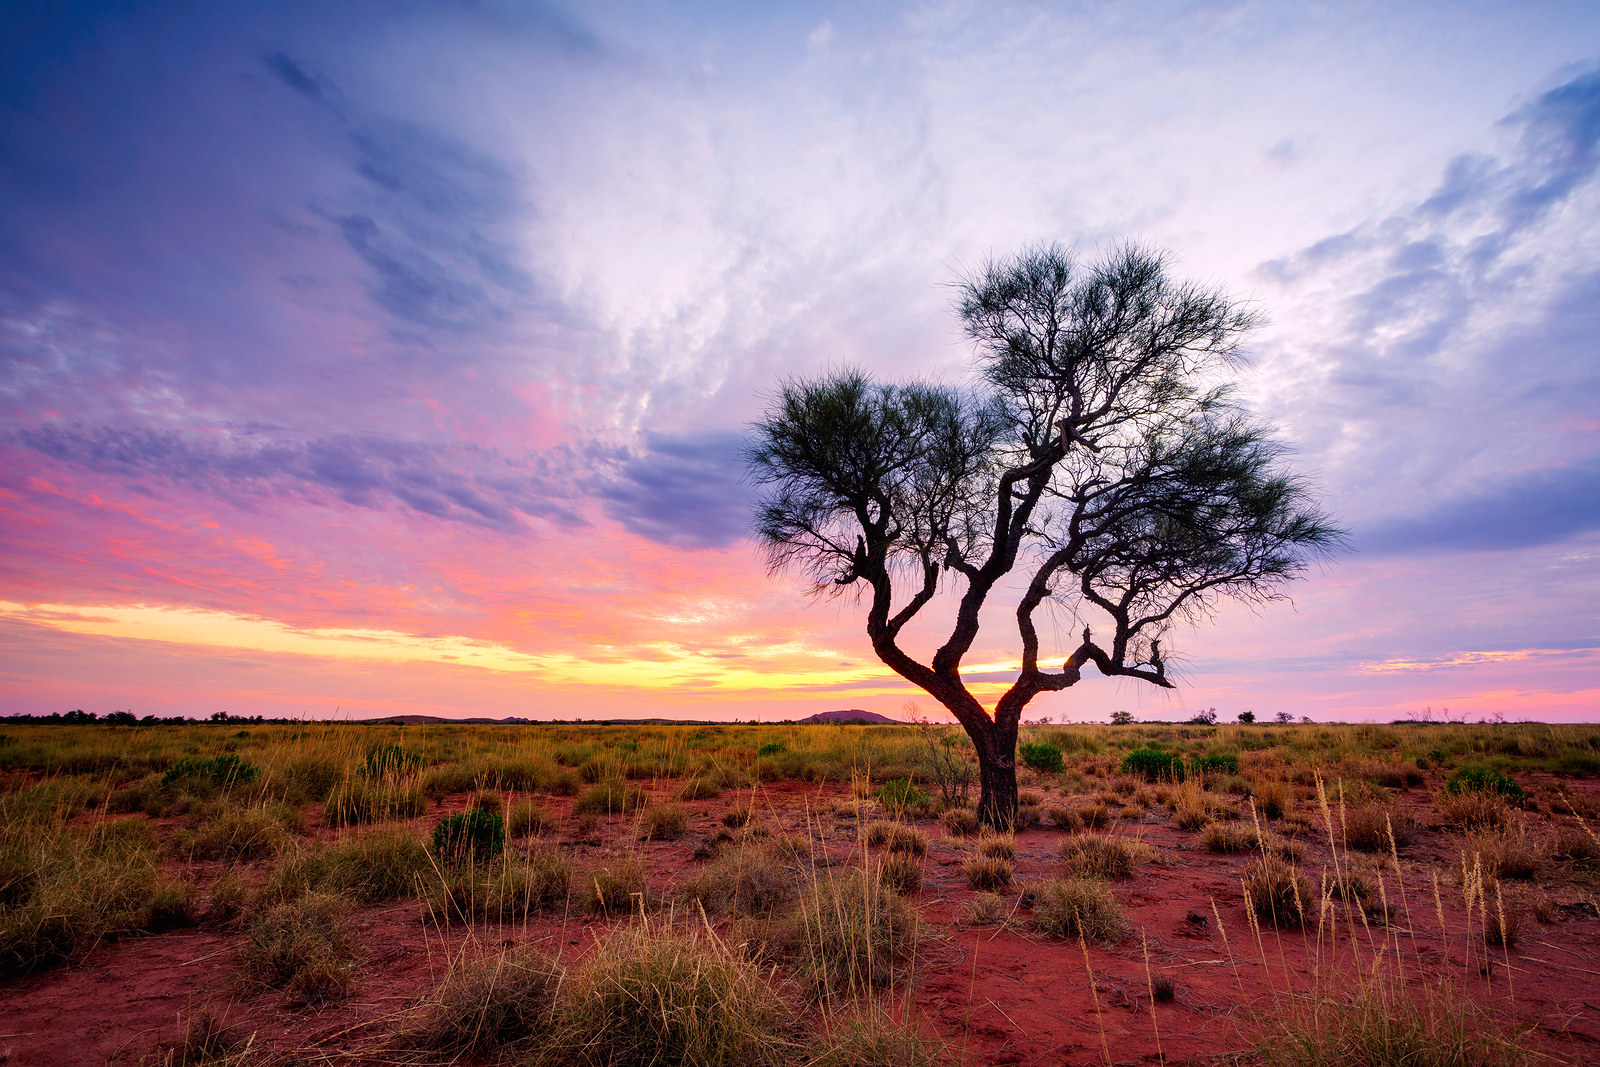 A Hakea tree stands alone in the Australian outback during sunset. Pilbara region, Western Australia, Australia